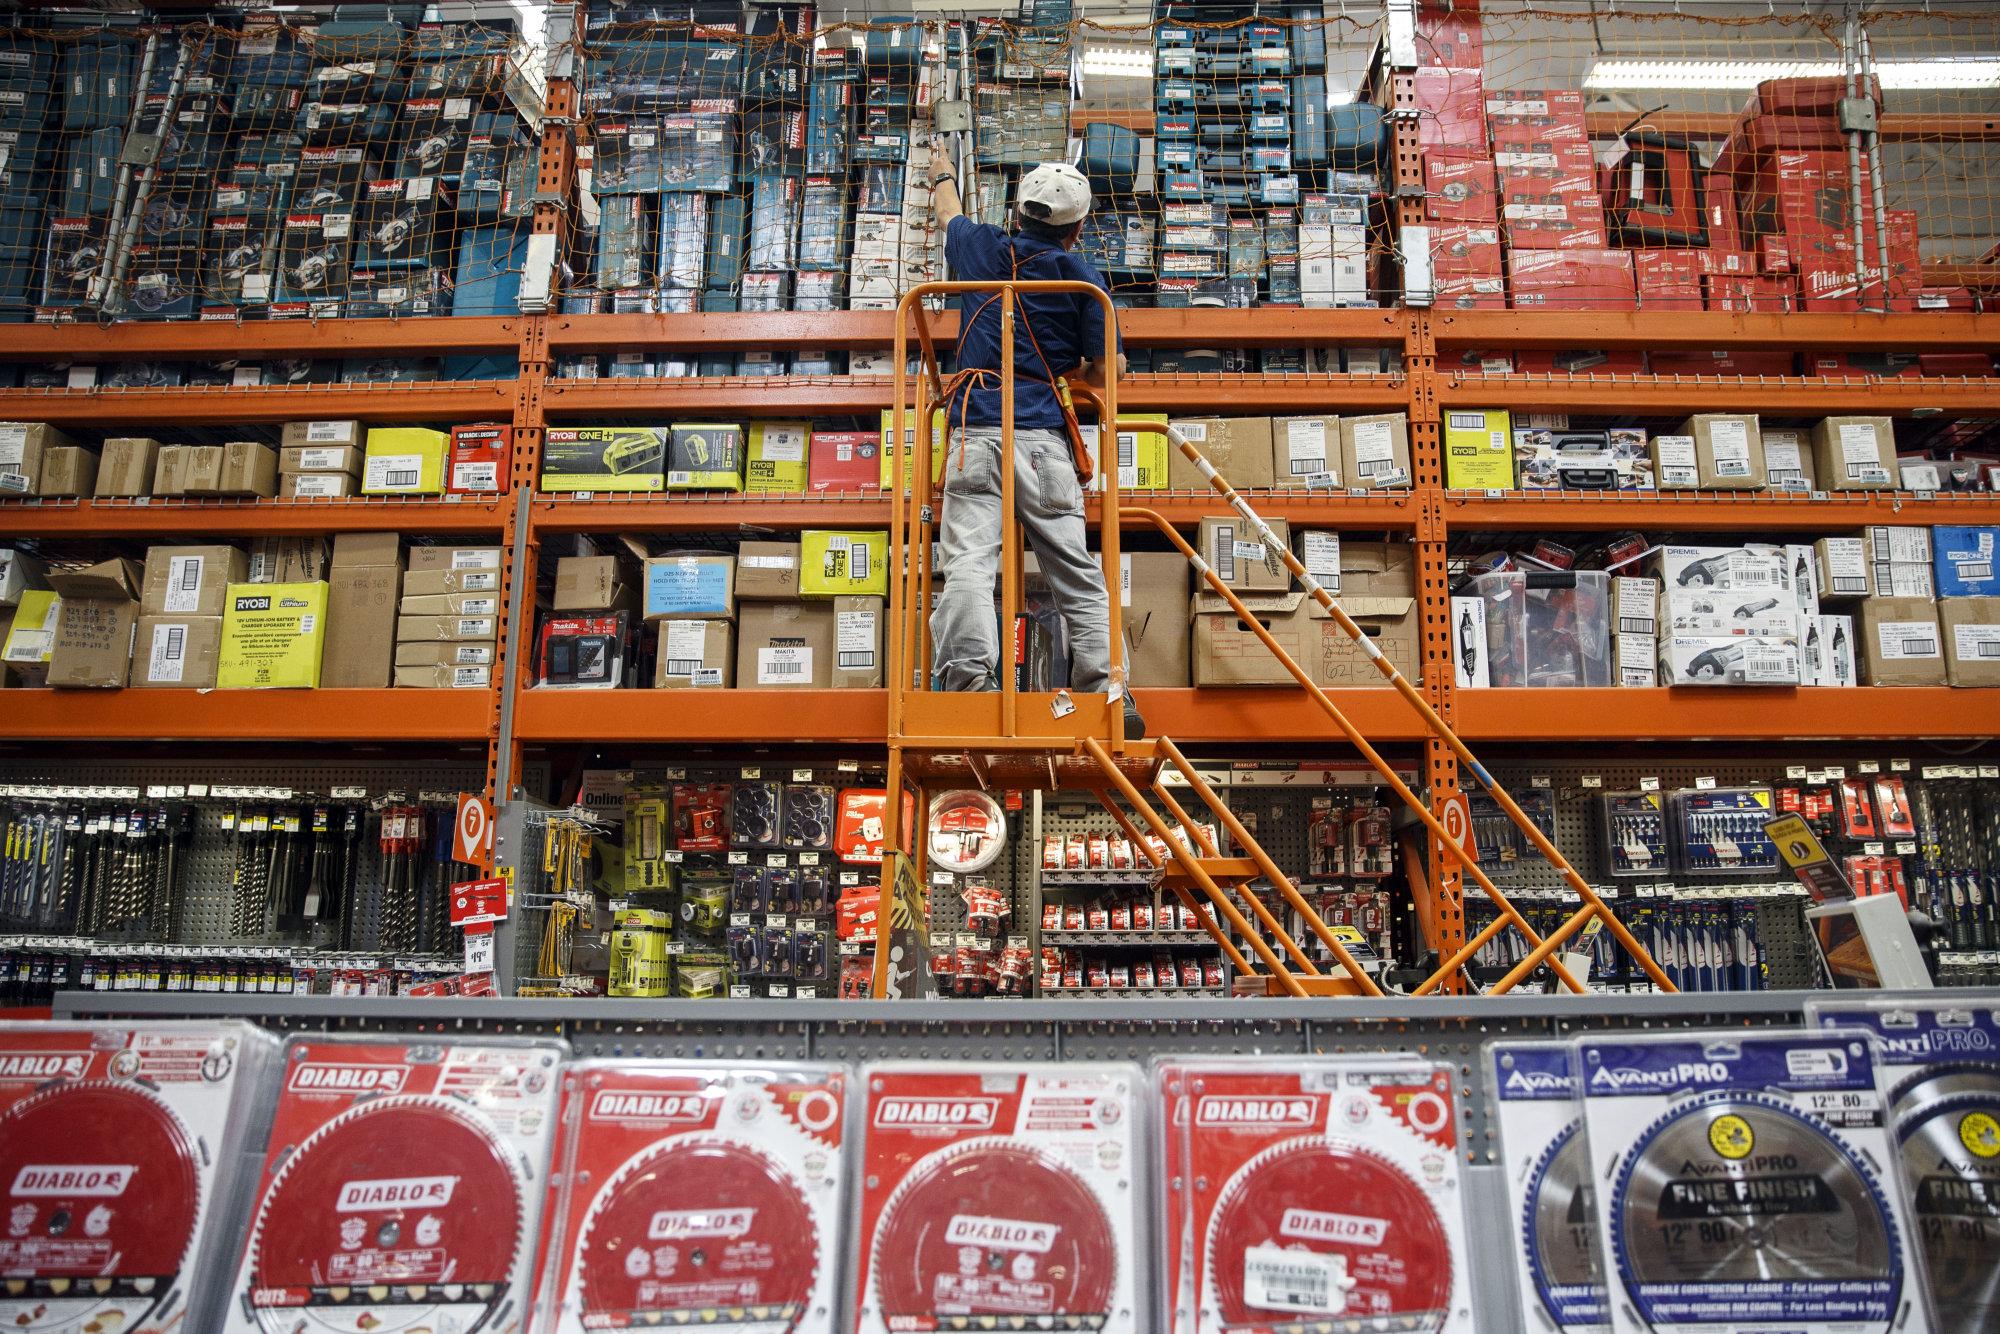 Home Depot jumps as sales rise on home-improvement demand - BNN Bloomberg